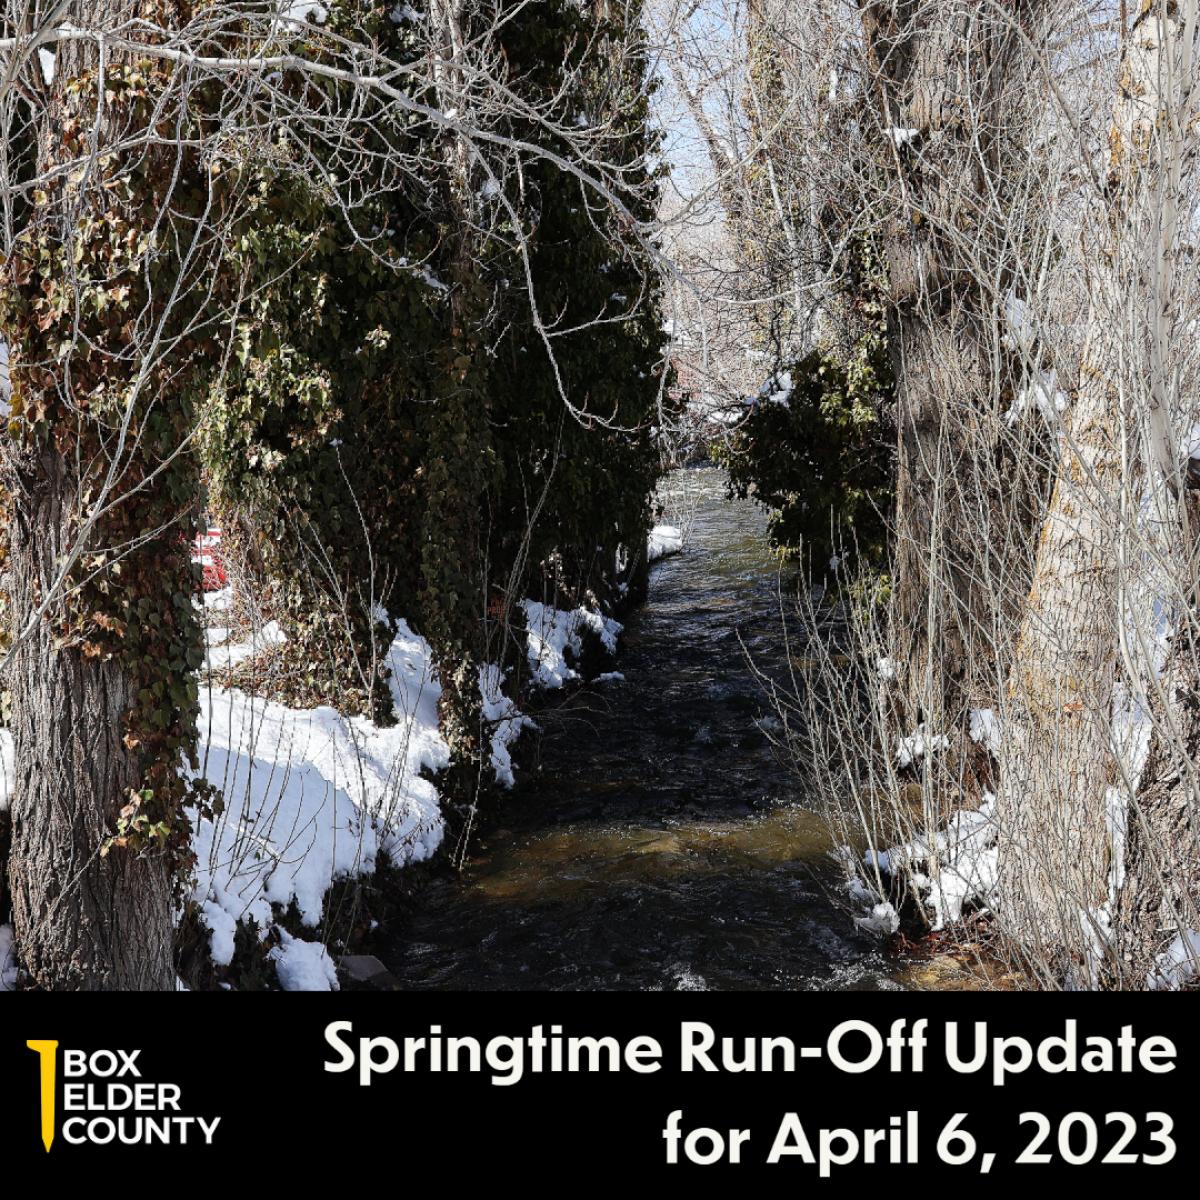 Springtime run off update for box elder county